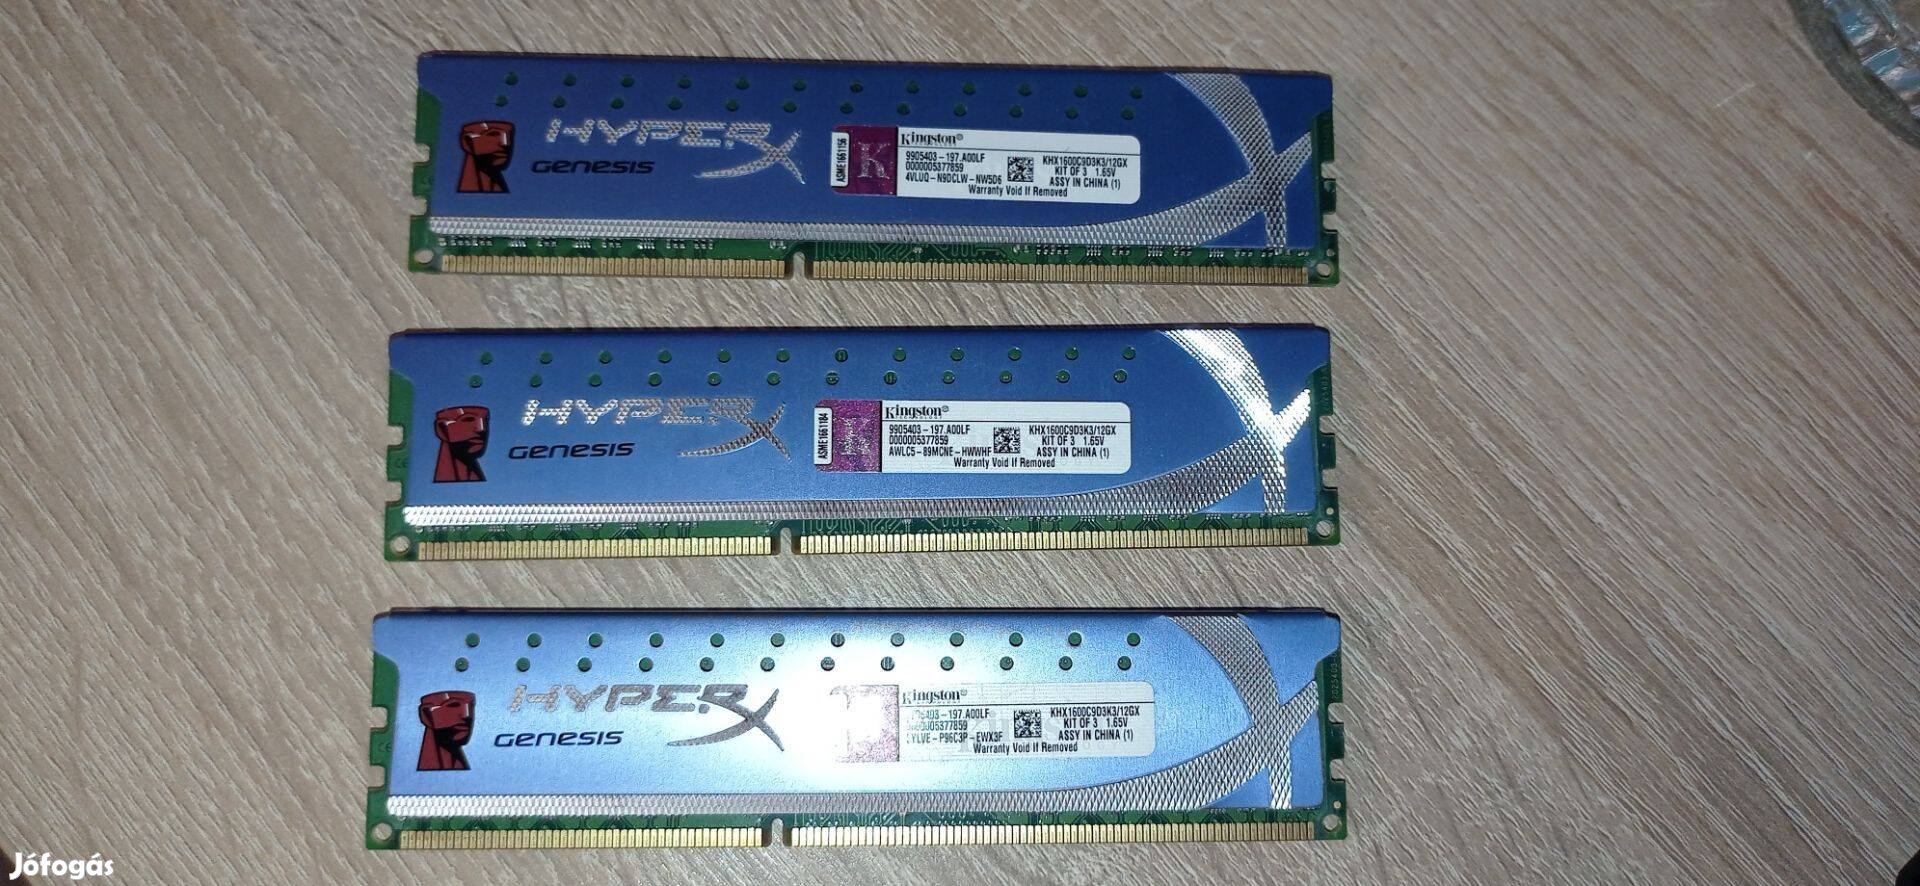 Kingston Hyperx 4GB RAM 1600MHz DDR3